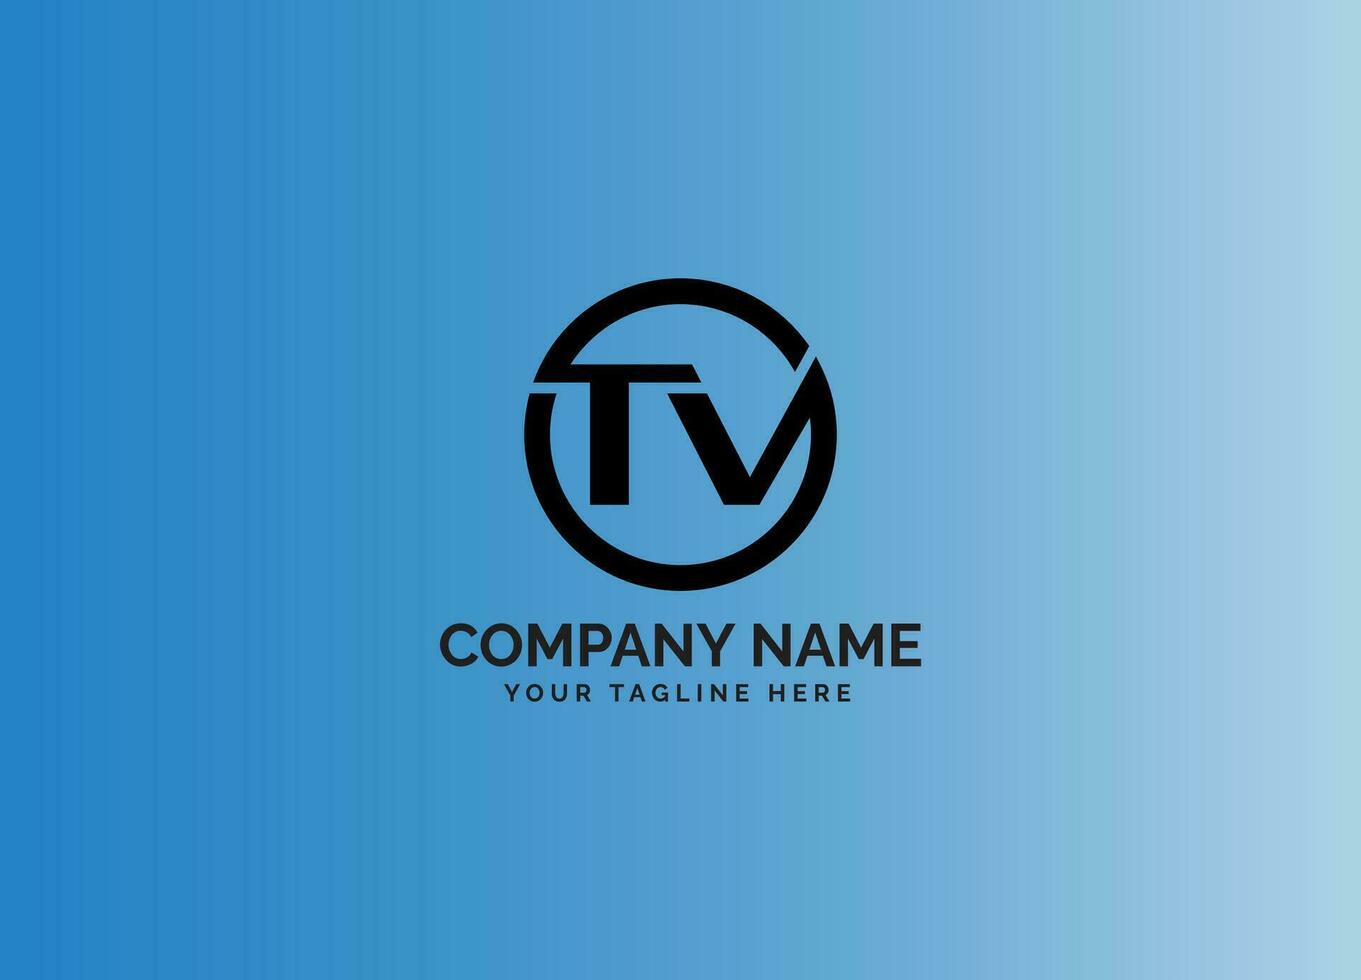 Simple TV letter logo icon design. TV letter logo design. Initial Monogram Letter TV Logo Design Vector Template. TV initial letter monogram business circle logo design vector template